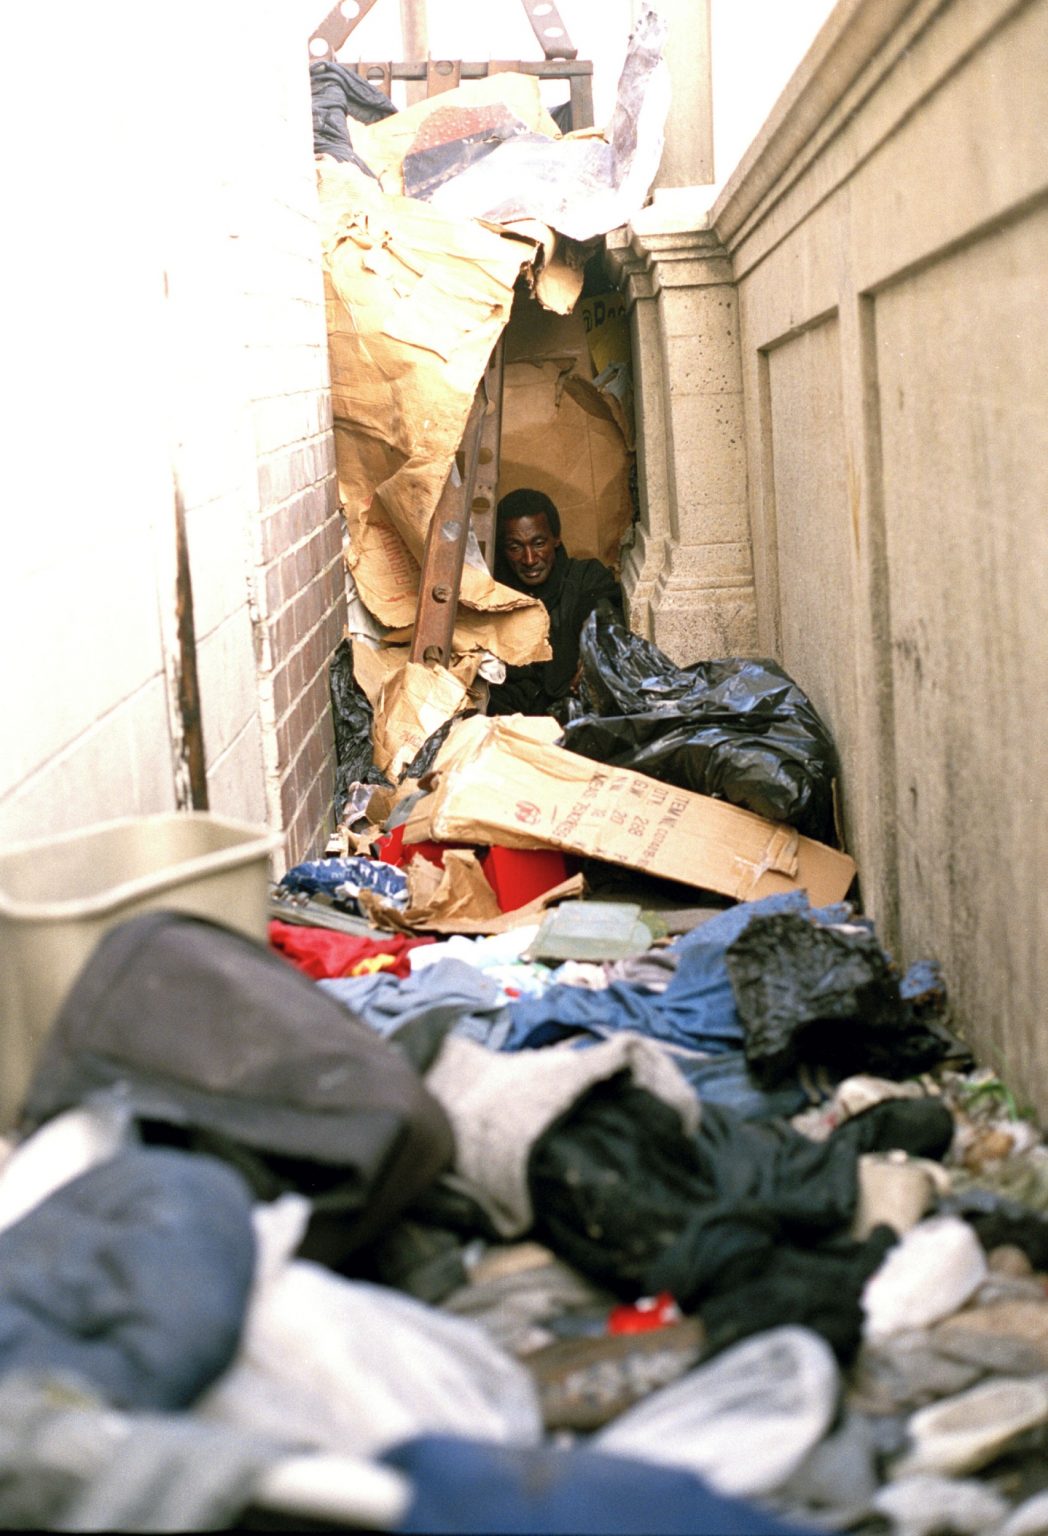 Los Angeles 2004 - Skid Row  - Homeless  *** Local Caption *** 00216064